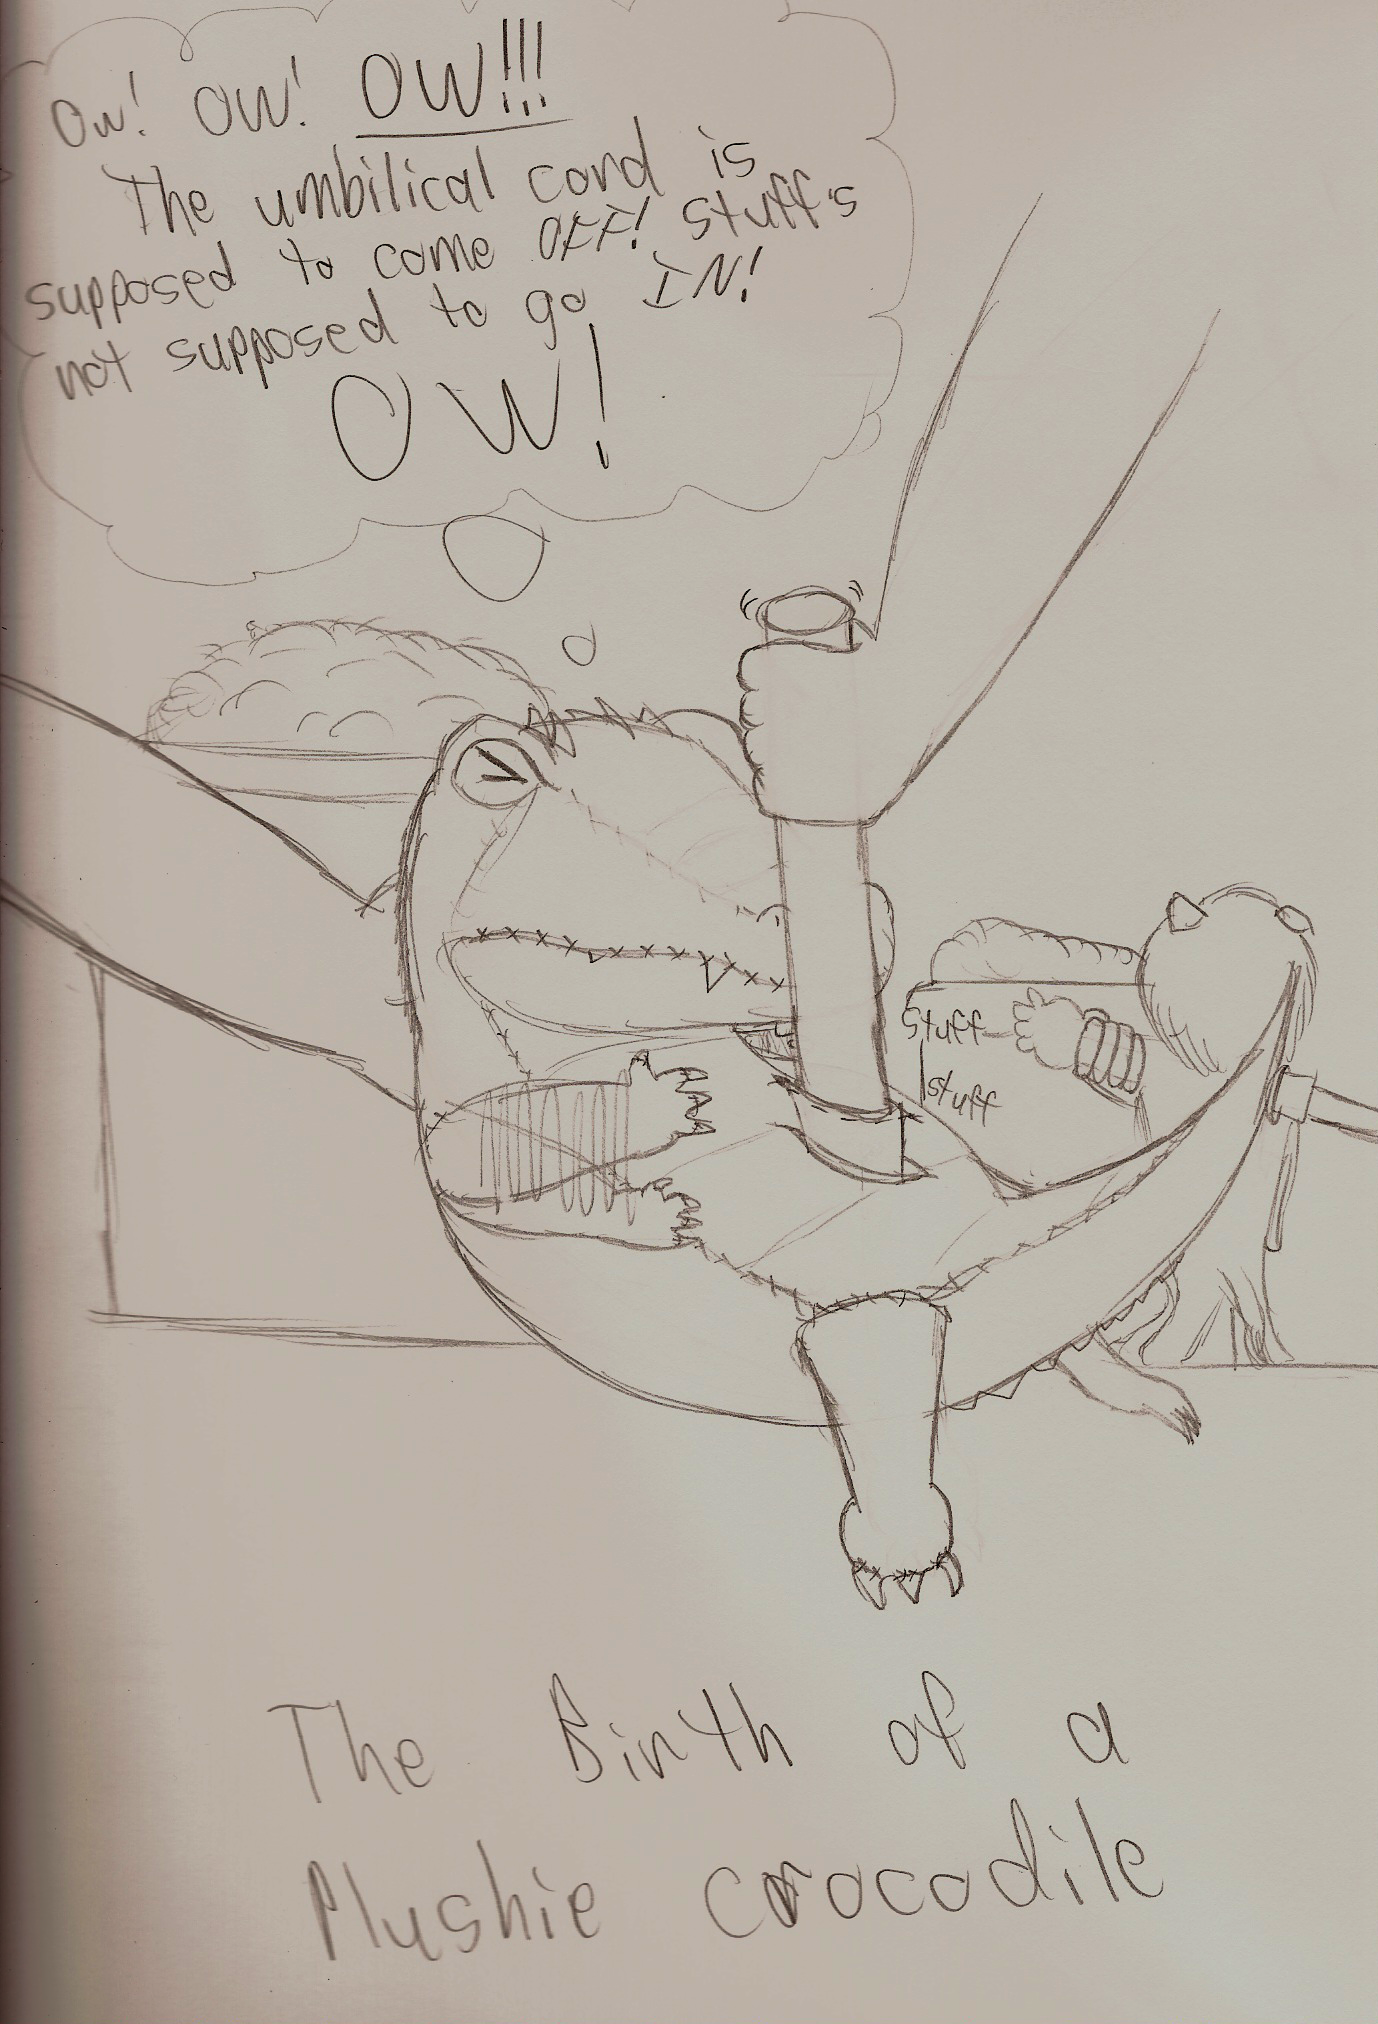 Rough Cartoon: Birth of a Plushie Crocodile by CharonTheSabercat